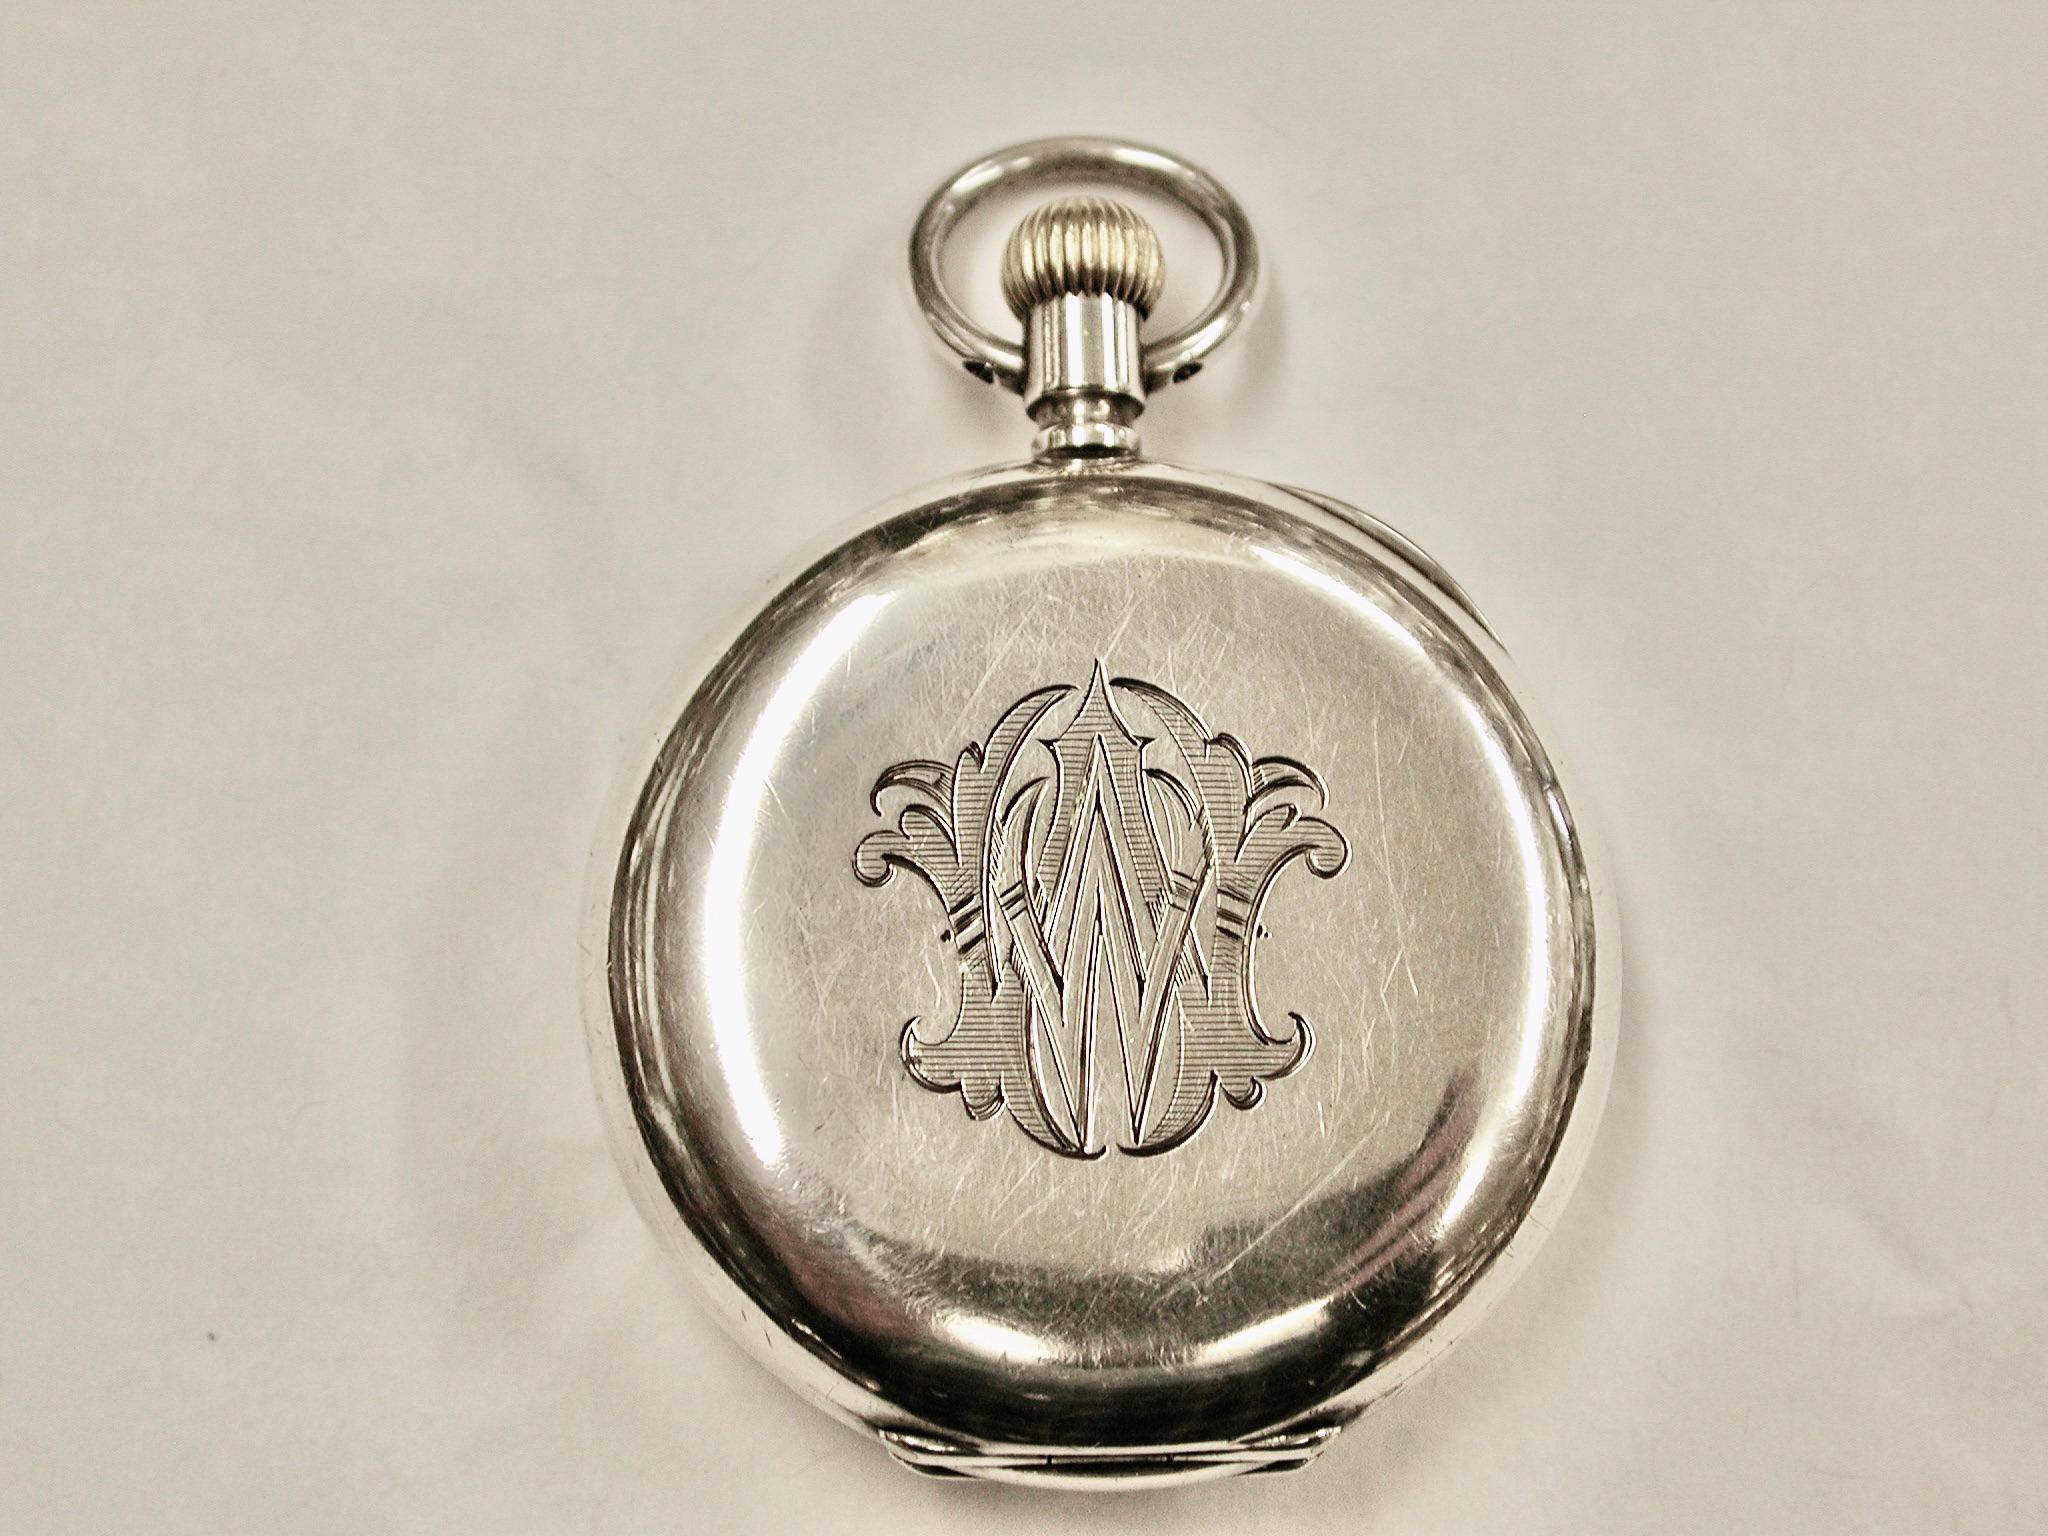 Edwardian Antique Silver Pocket Watch Dated 1913 London Parkinson & Frodsham For Sale